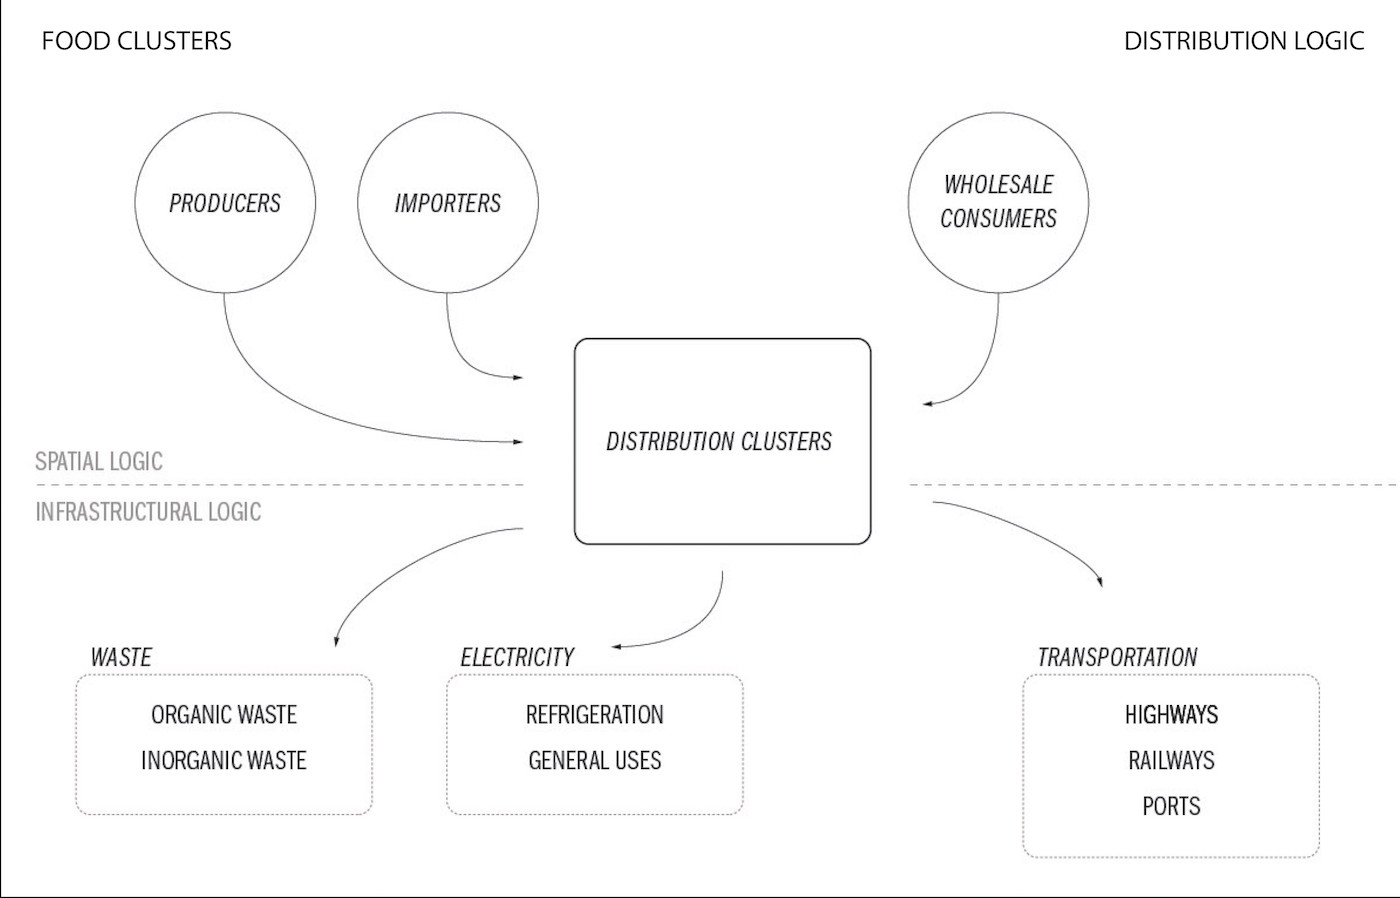 Davi Parente - Distribution Cluster Logic Diagram